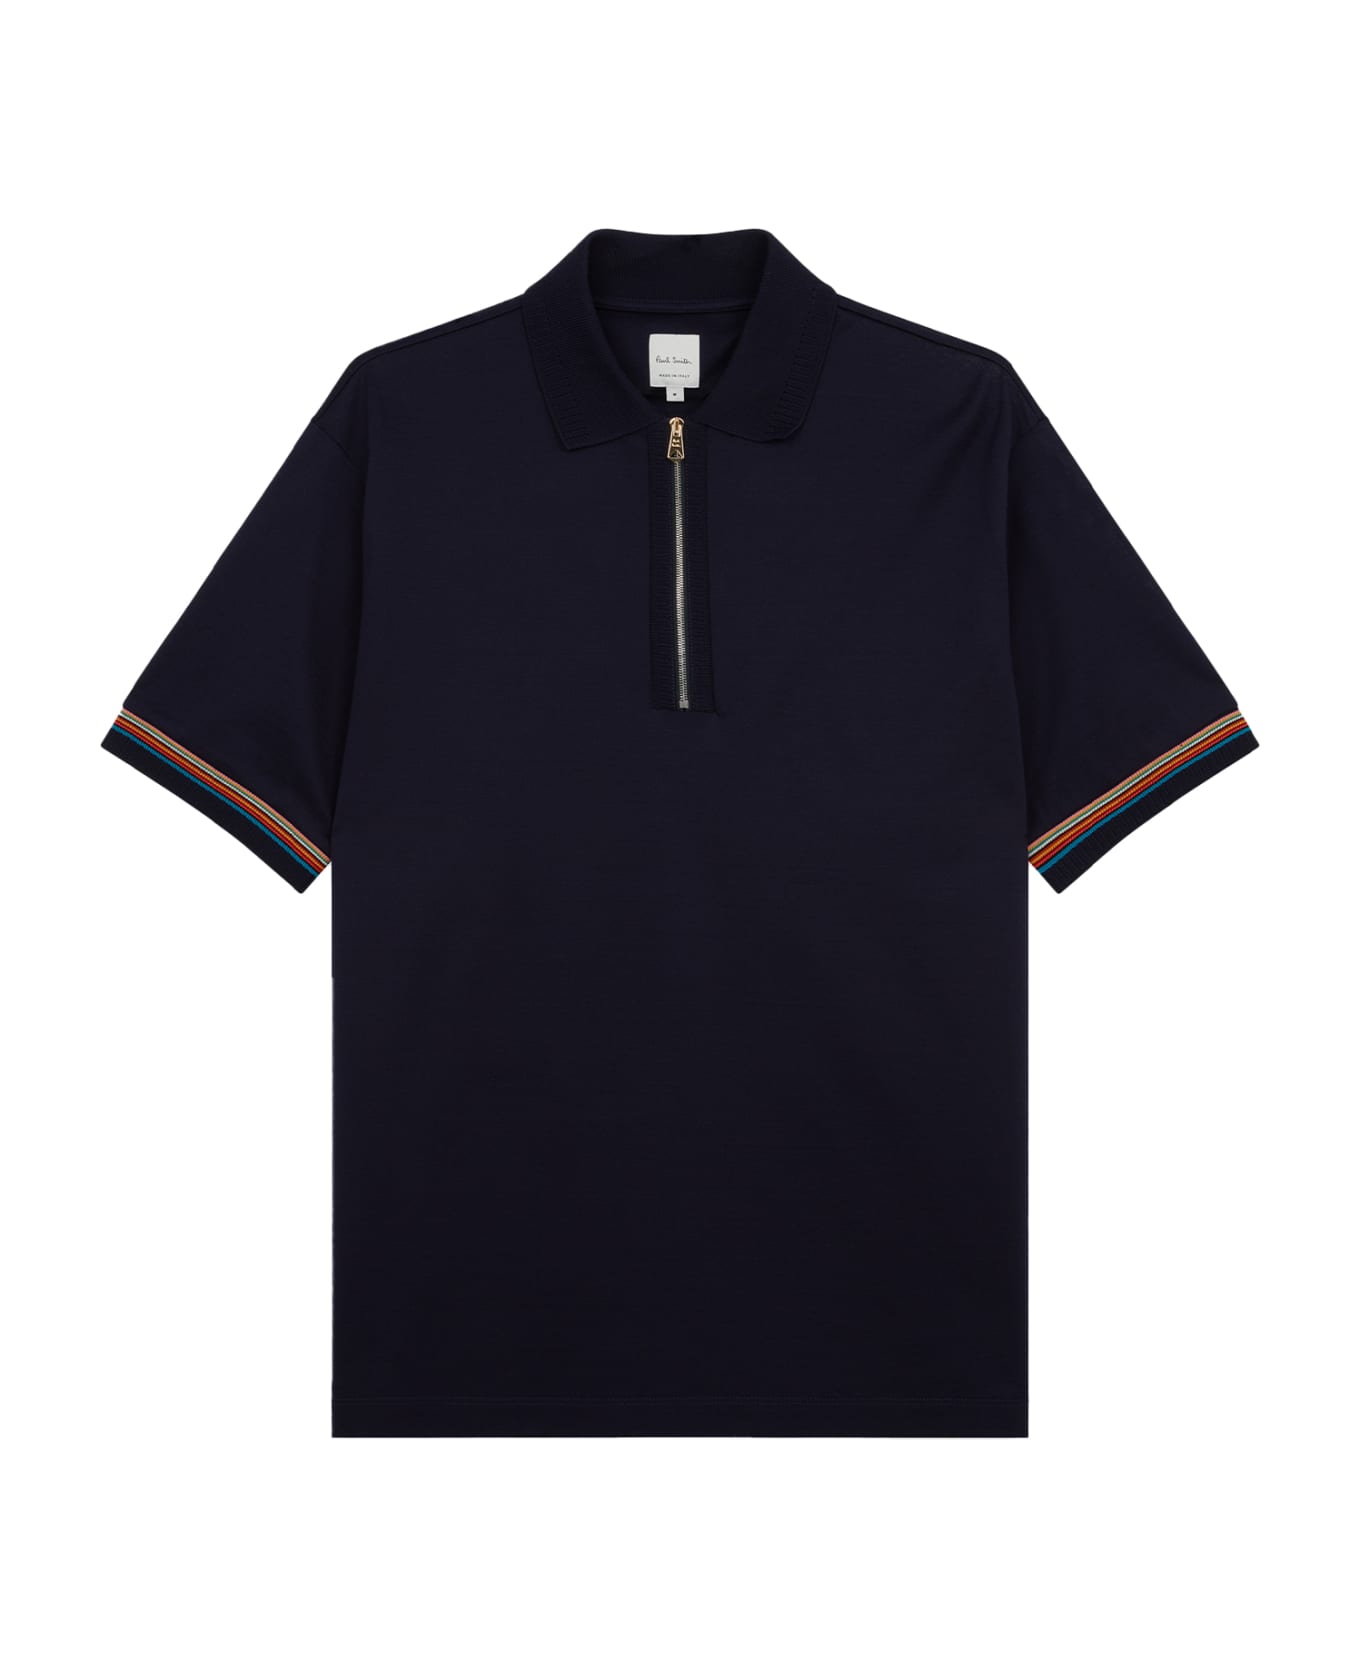 Paul Smith Dark Navy Short-sleeved Polo Shirt - DK NAVY